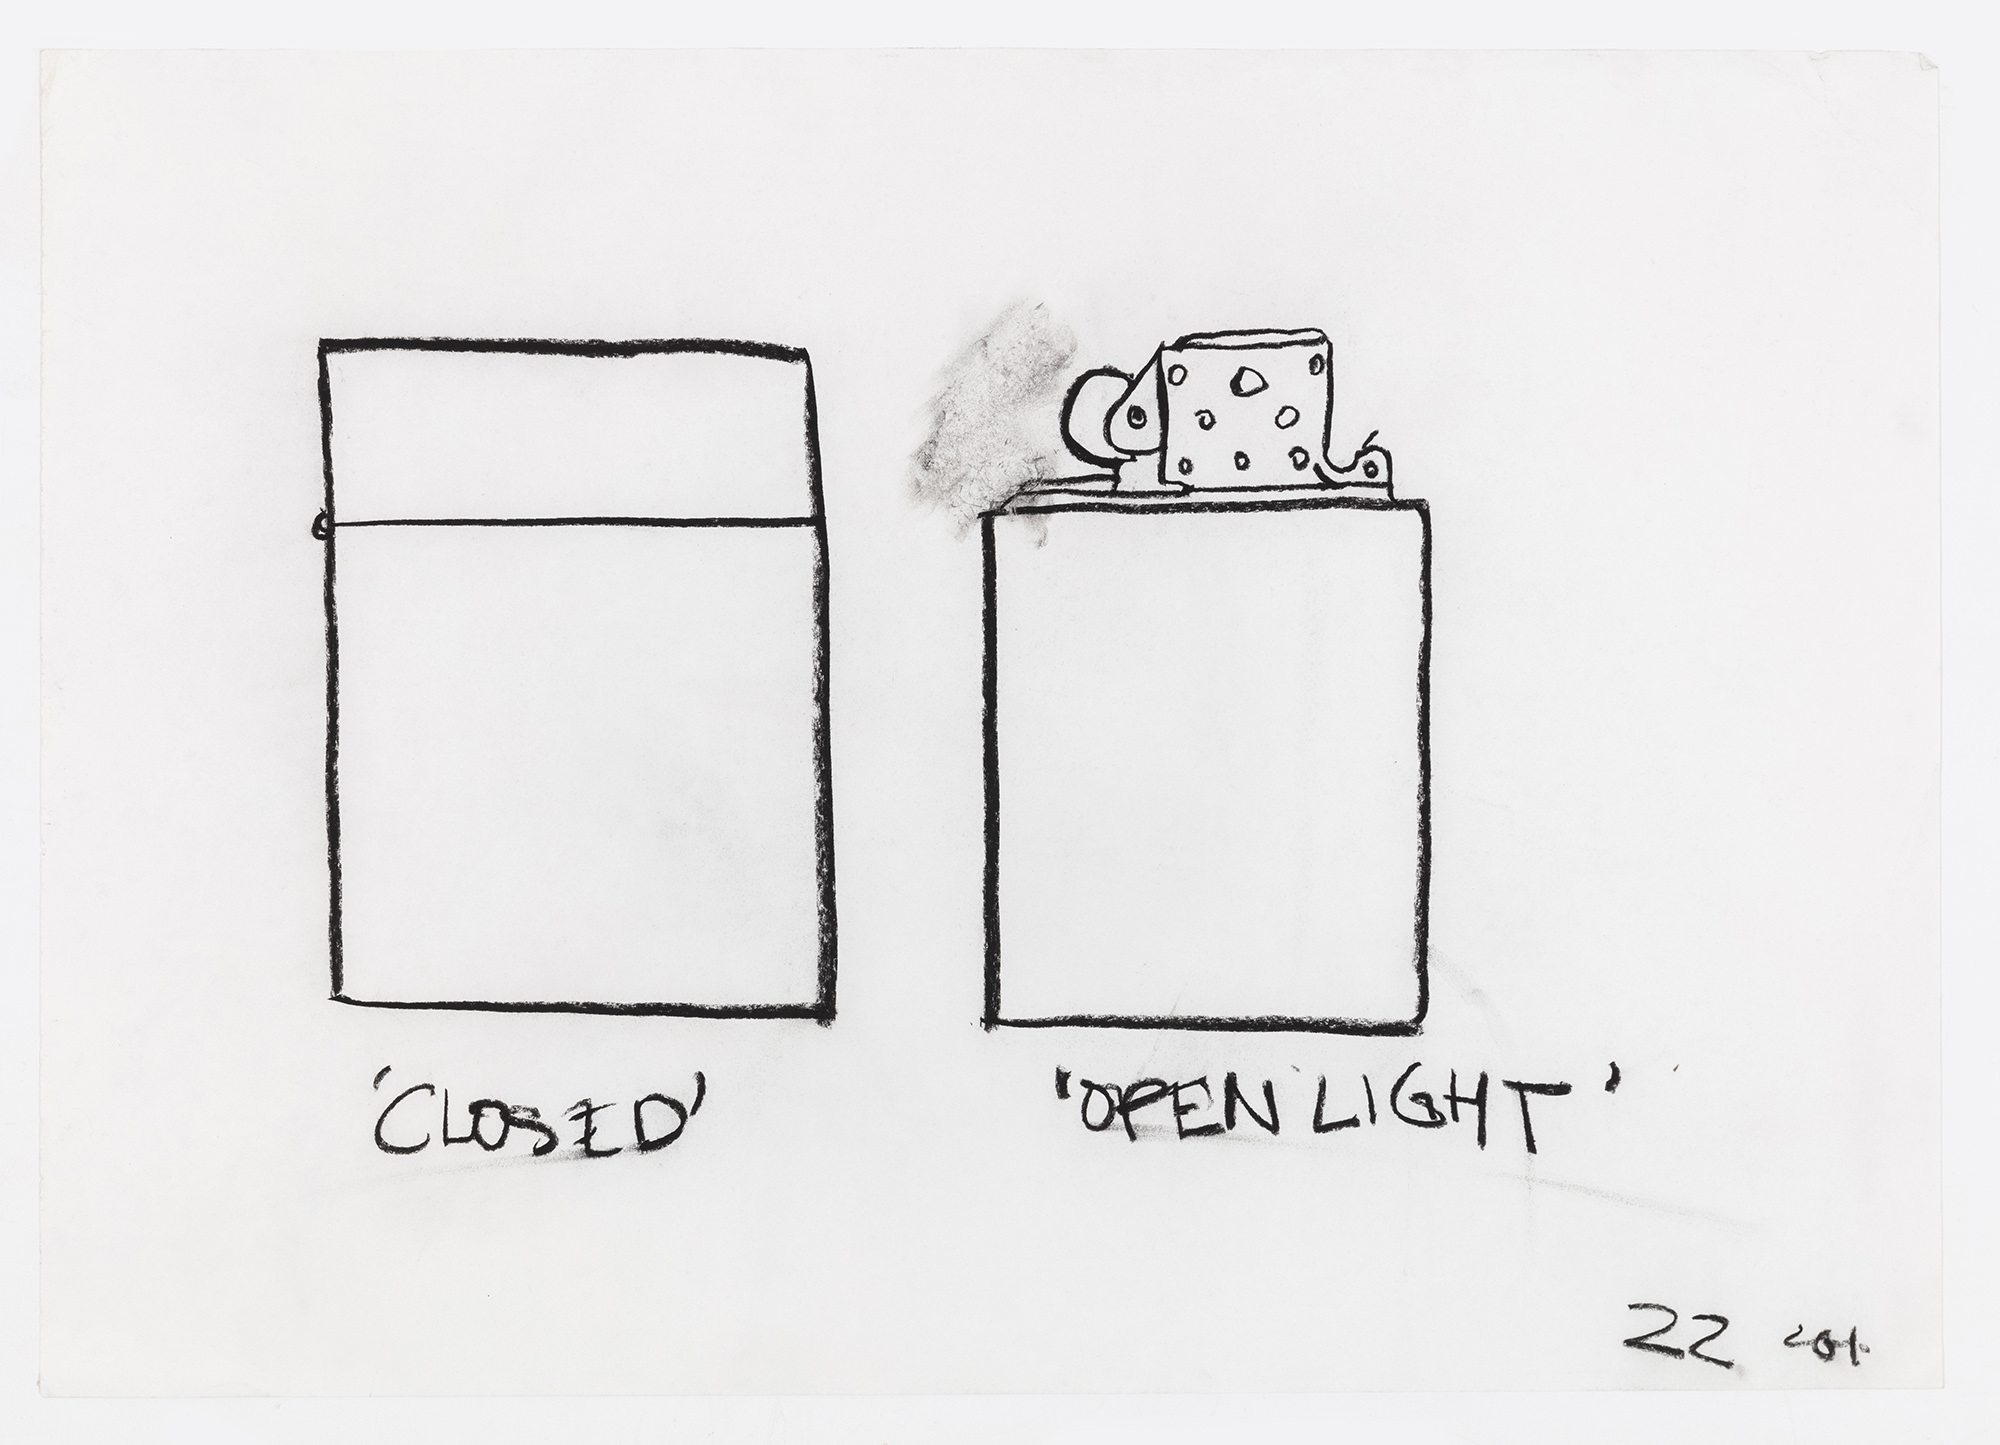  - CLOSED/OPEN LIGHT, 2001